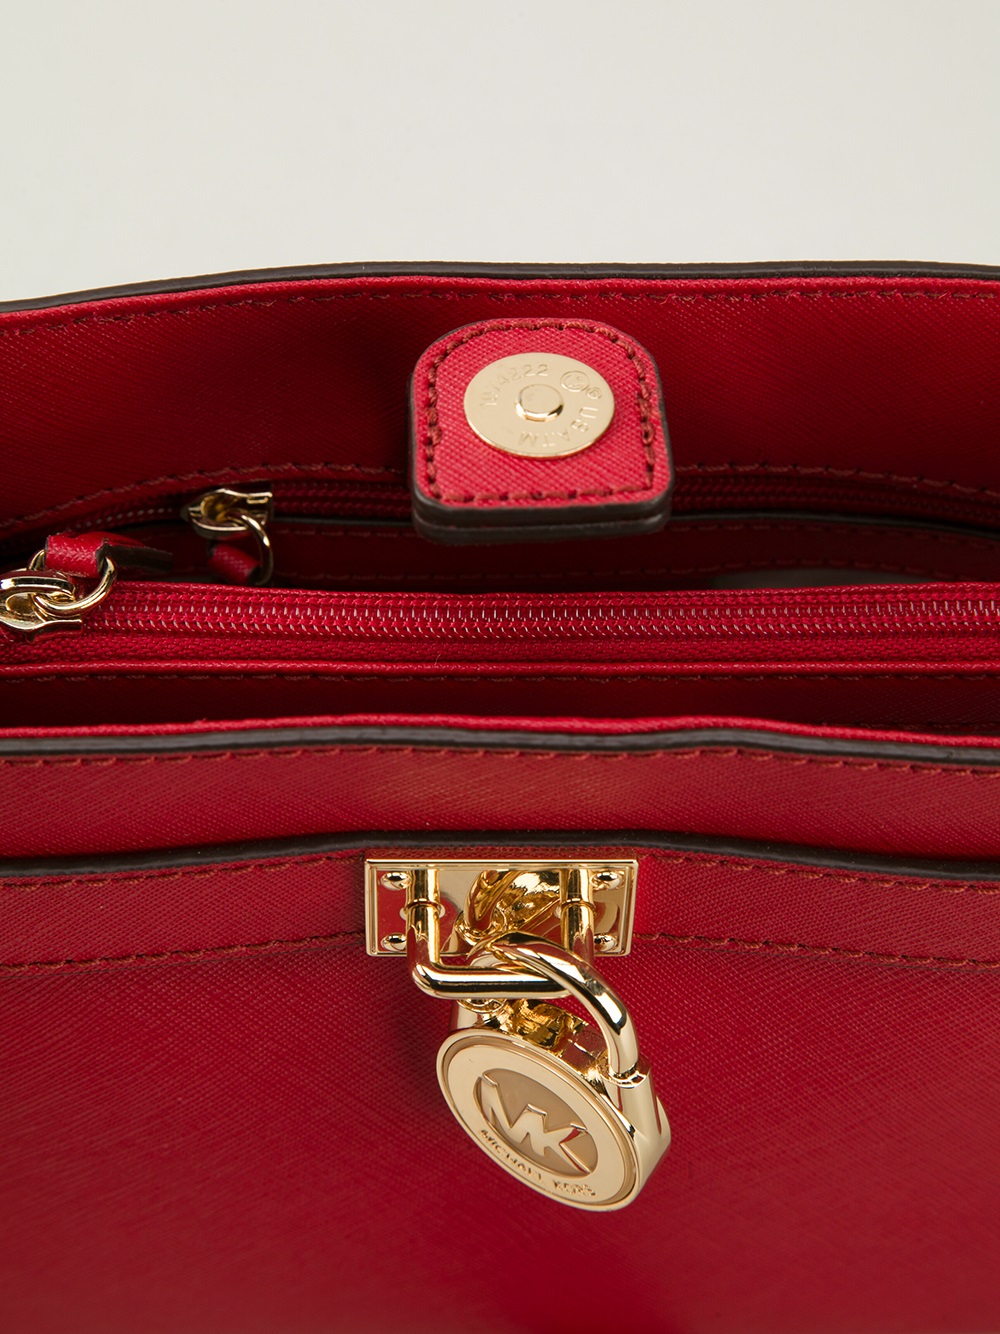 MICHAEL Michael Kors Hamilton Small Shoulder Bag in Red - Lyst